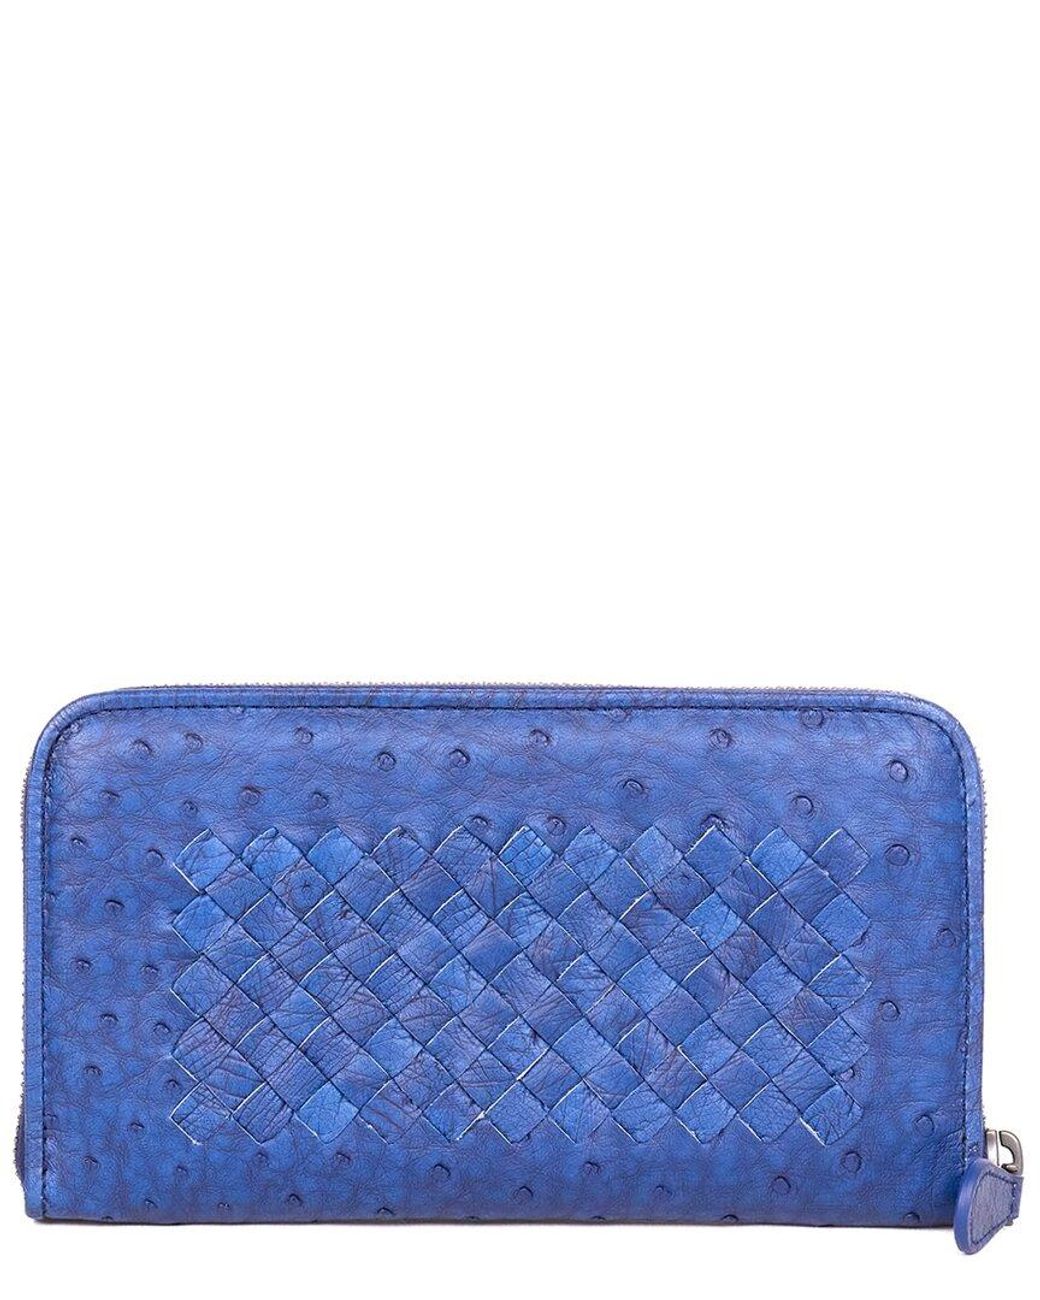 Bottega Veneta Intrecciato Leather Long Wallet in Blue for Men | Lyst